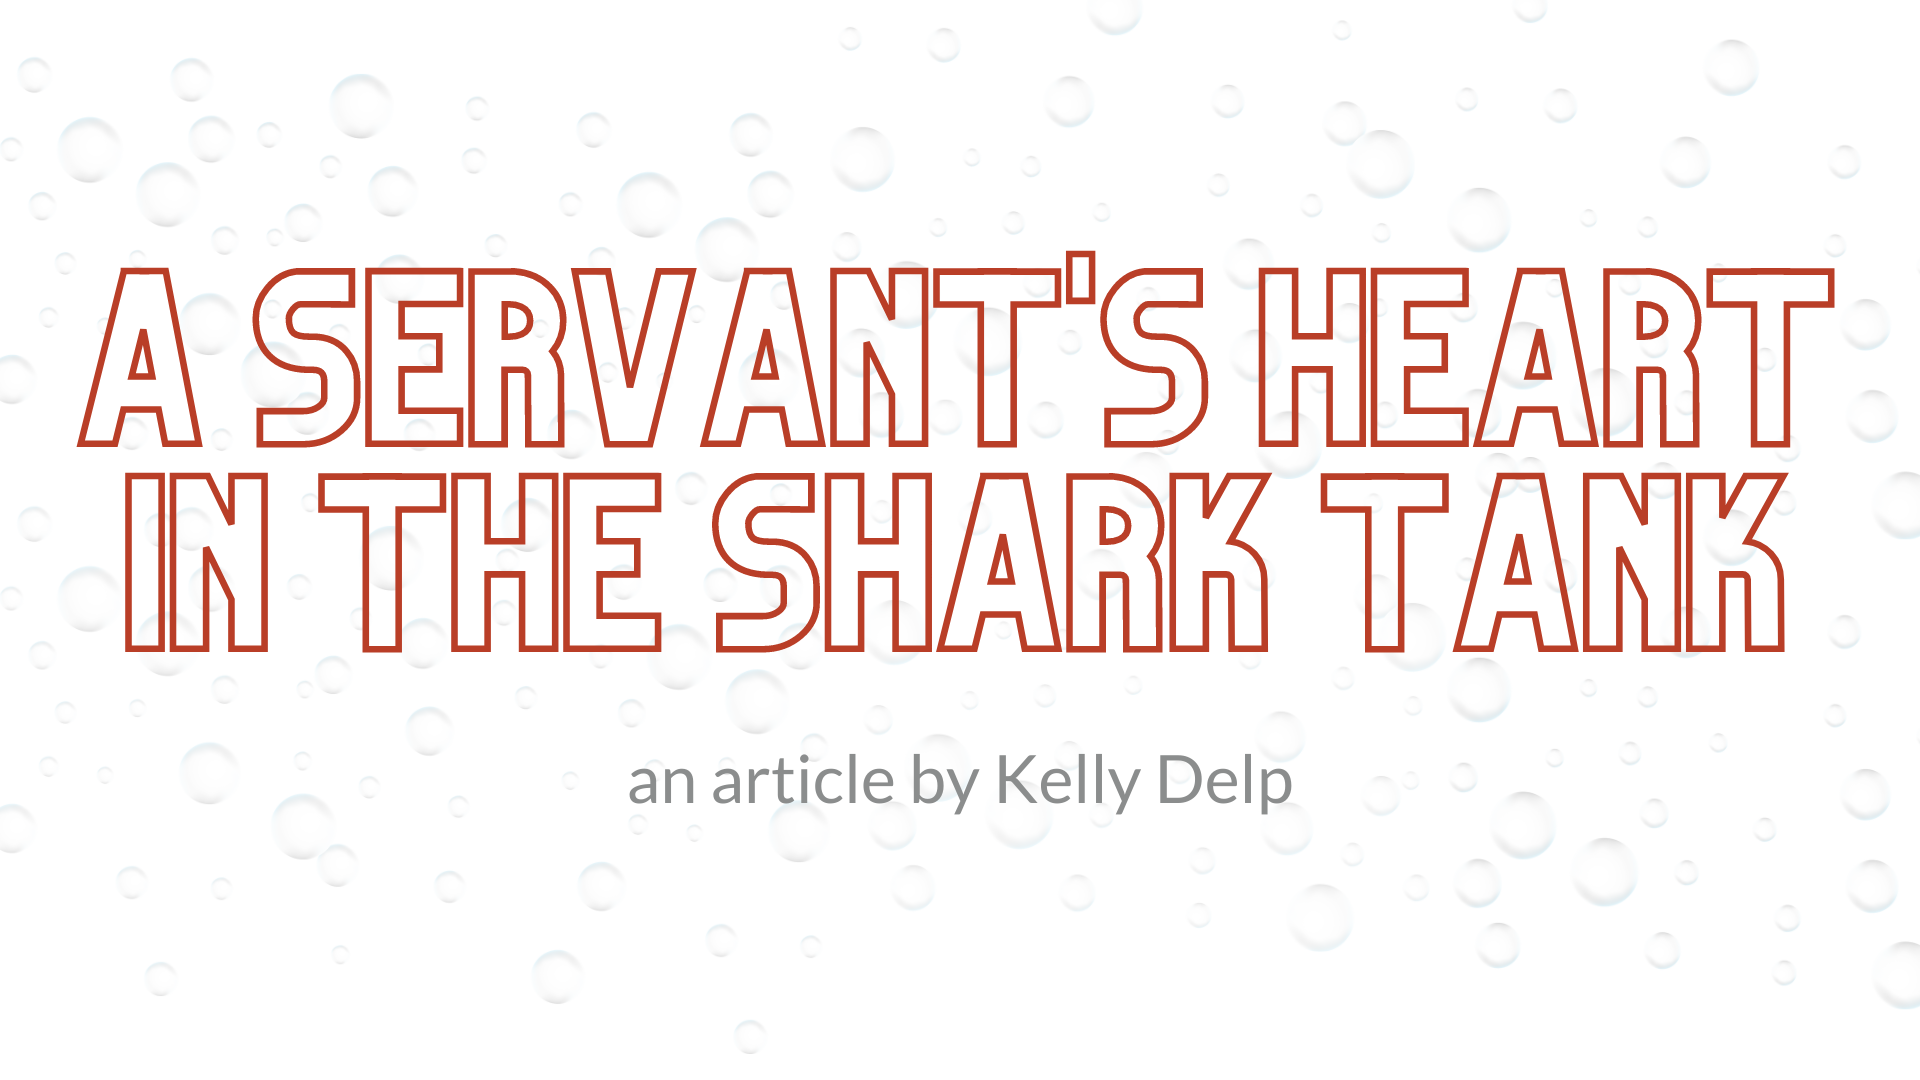 A Servant’s Heart in the Shark Tank